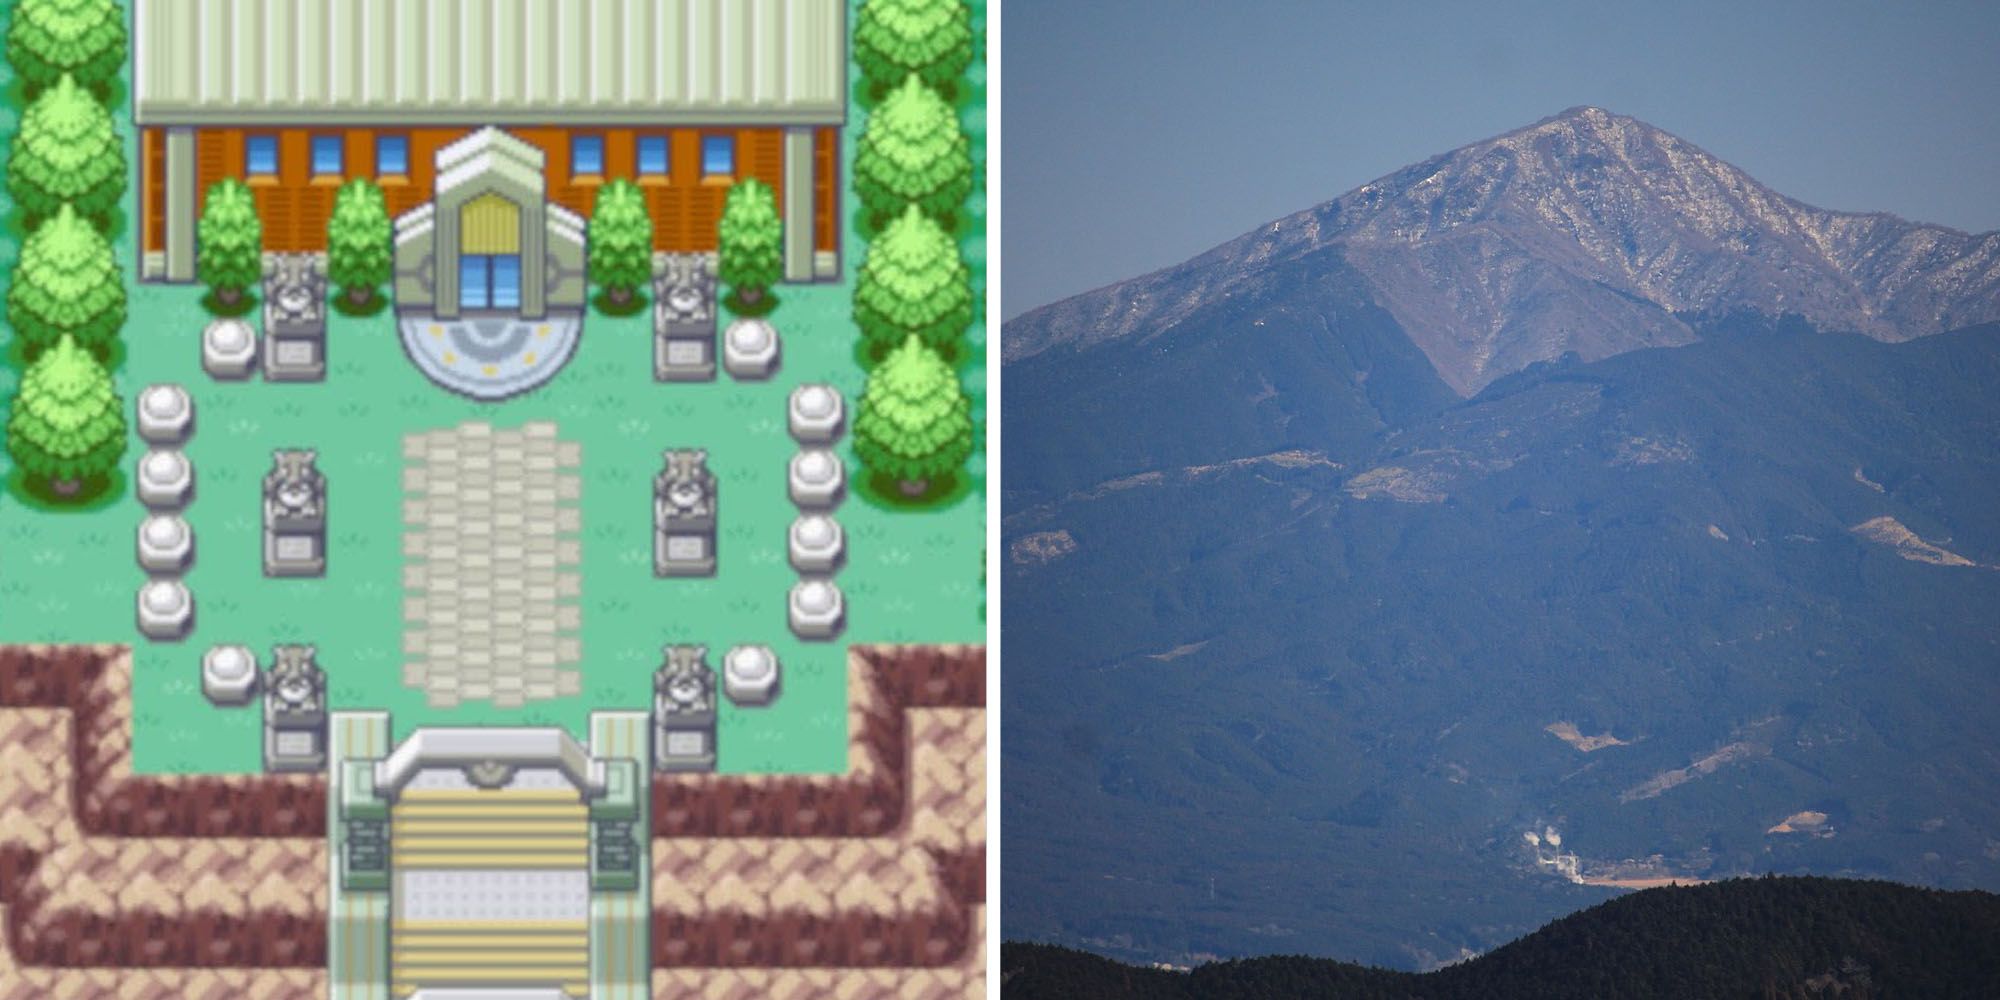 Indigo Plateau and Mount Echizen-dake comparison